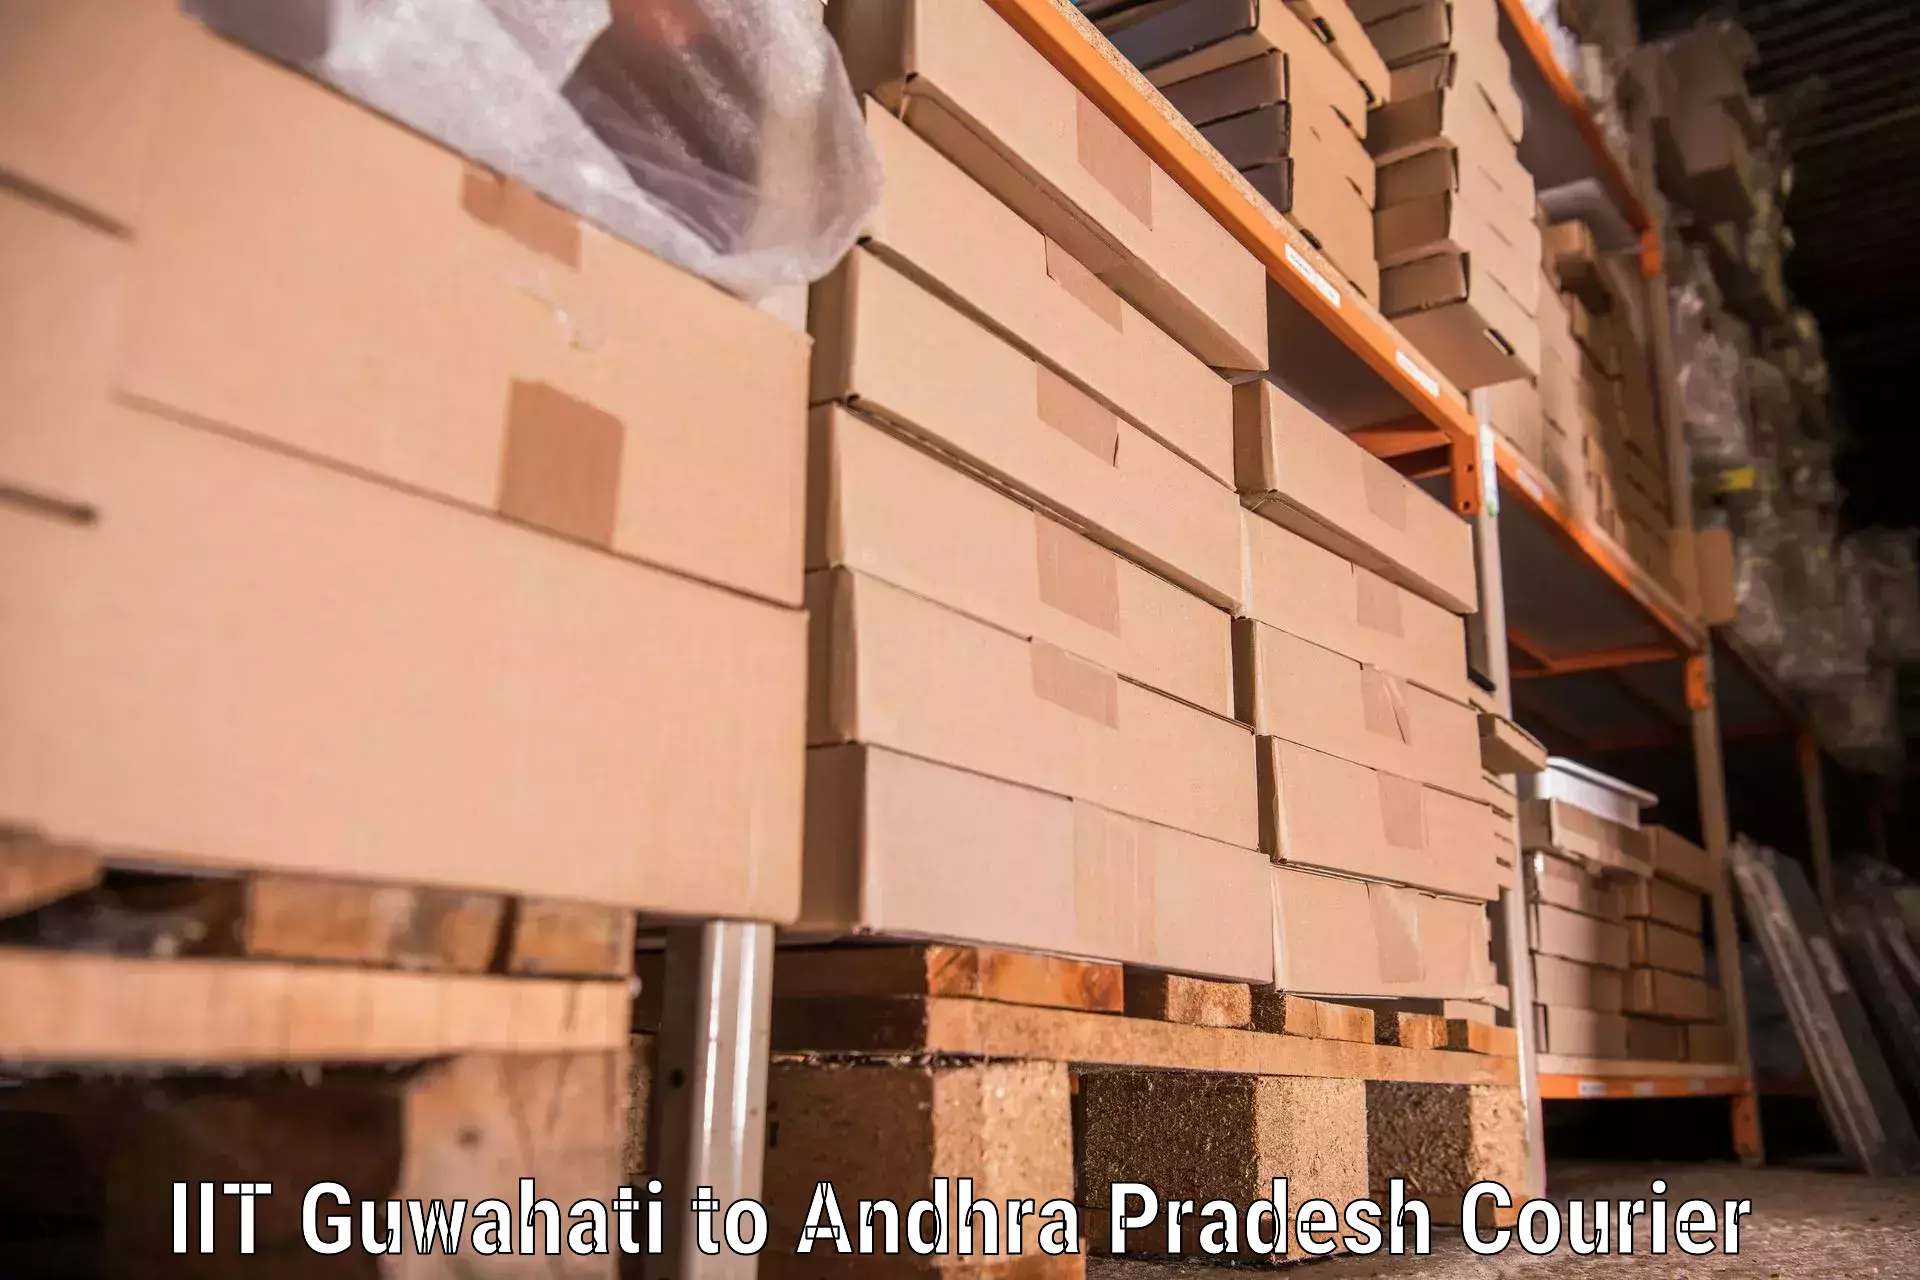 Professional moving company IIT Guwahati to Parvathipuram